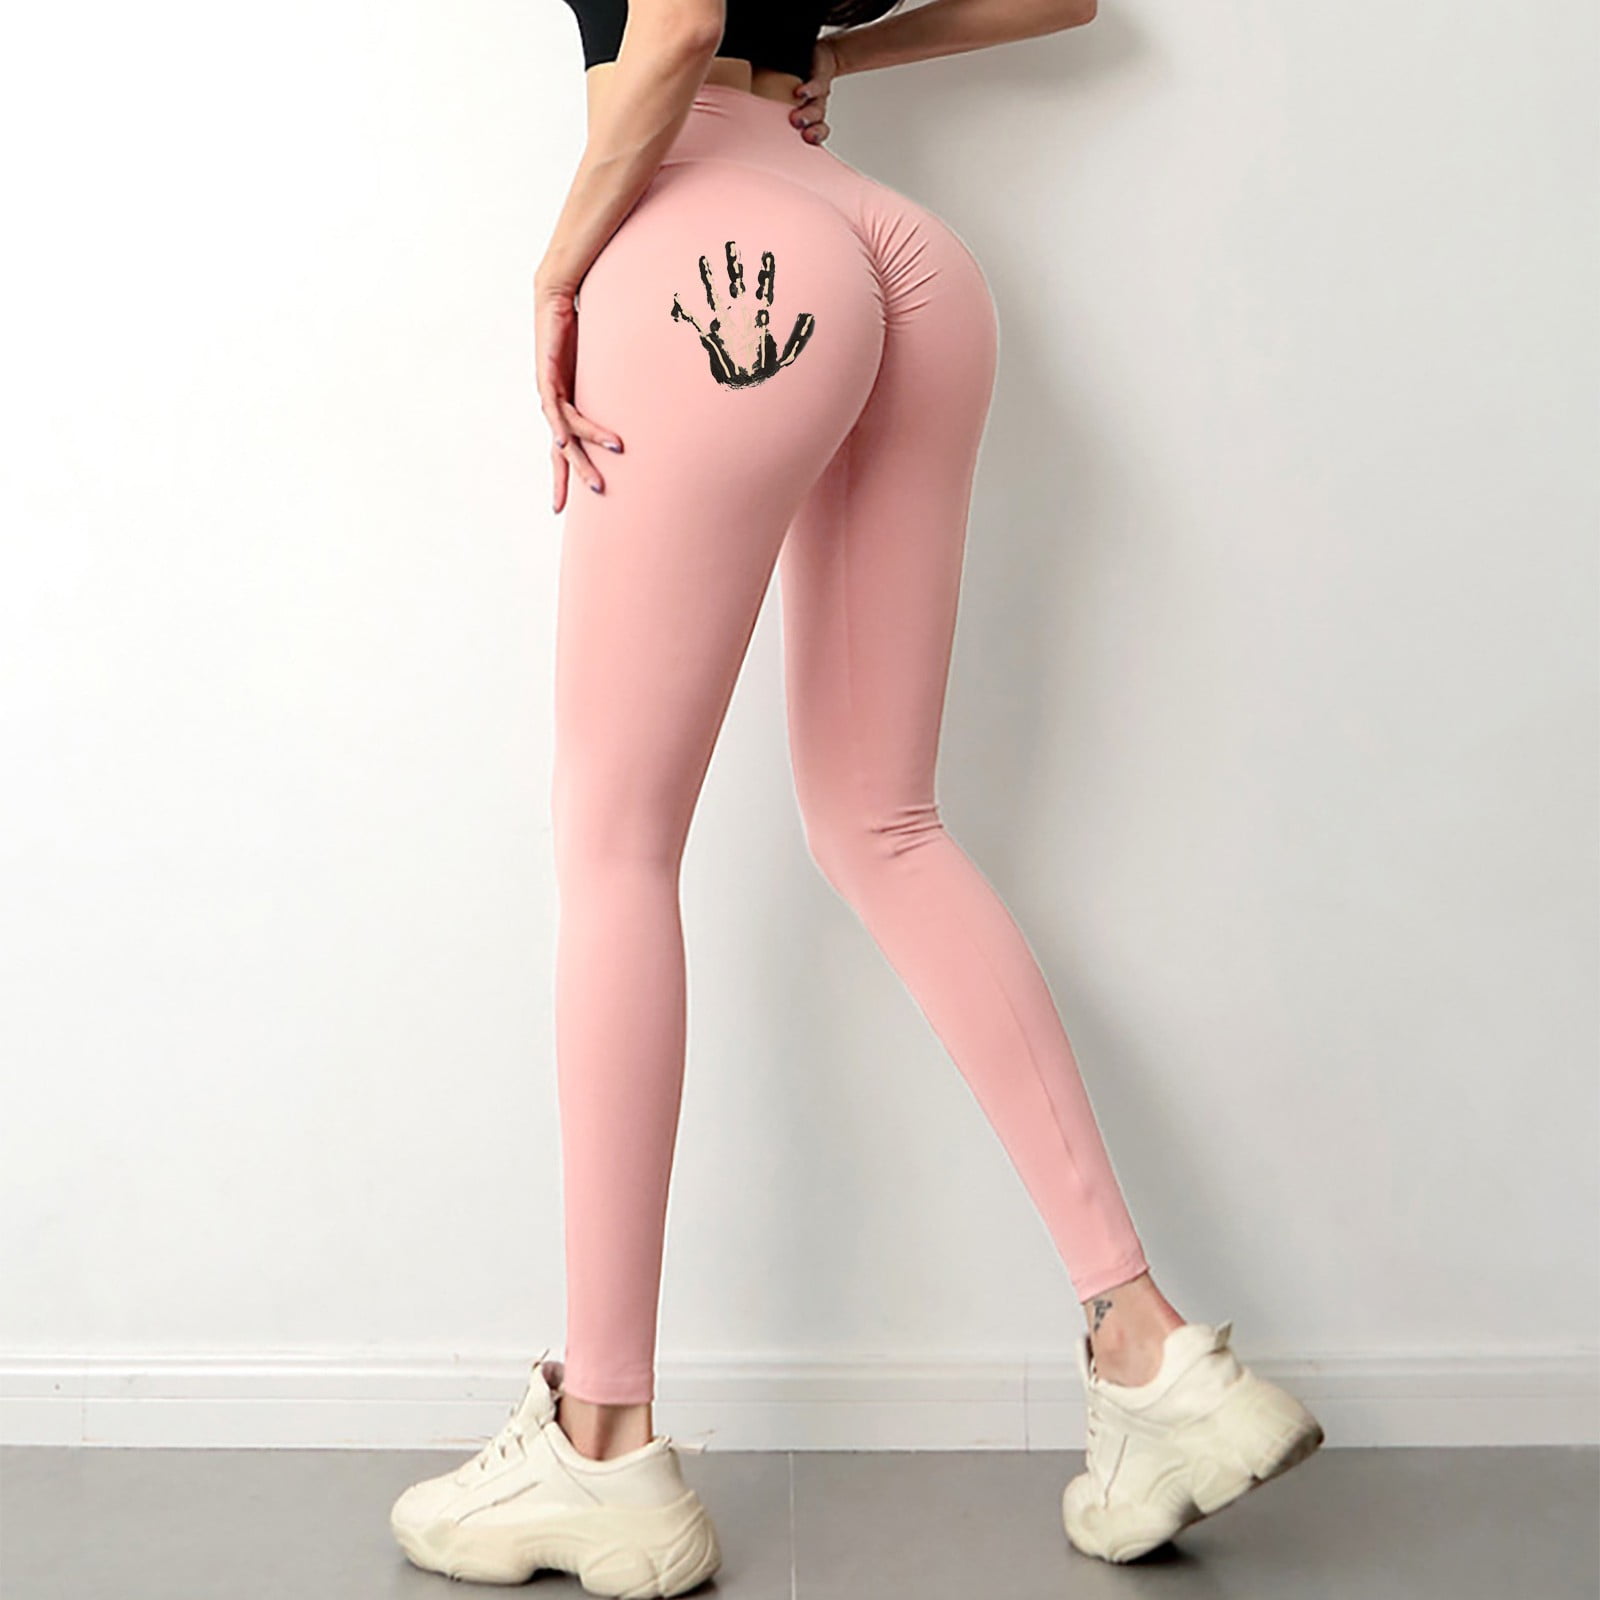 Gyouwnll Women'S Peach Yoga Pants High Waist Tight-Fitting Sports Printed  Fitness Pants(Pink XXL) 